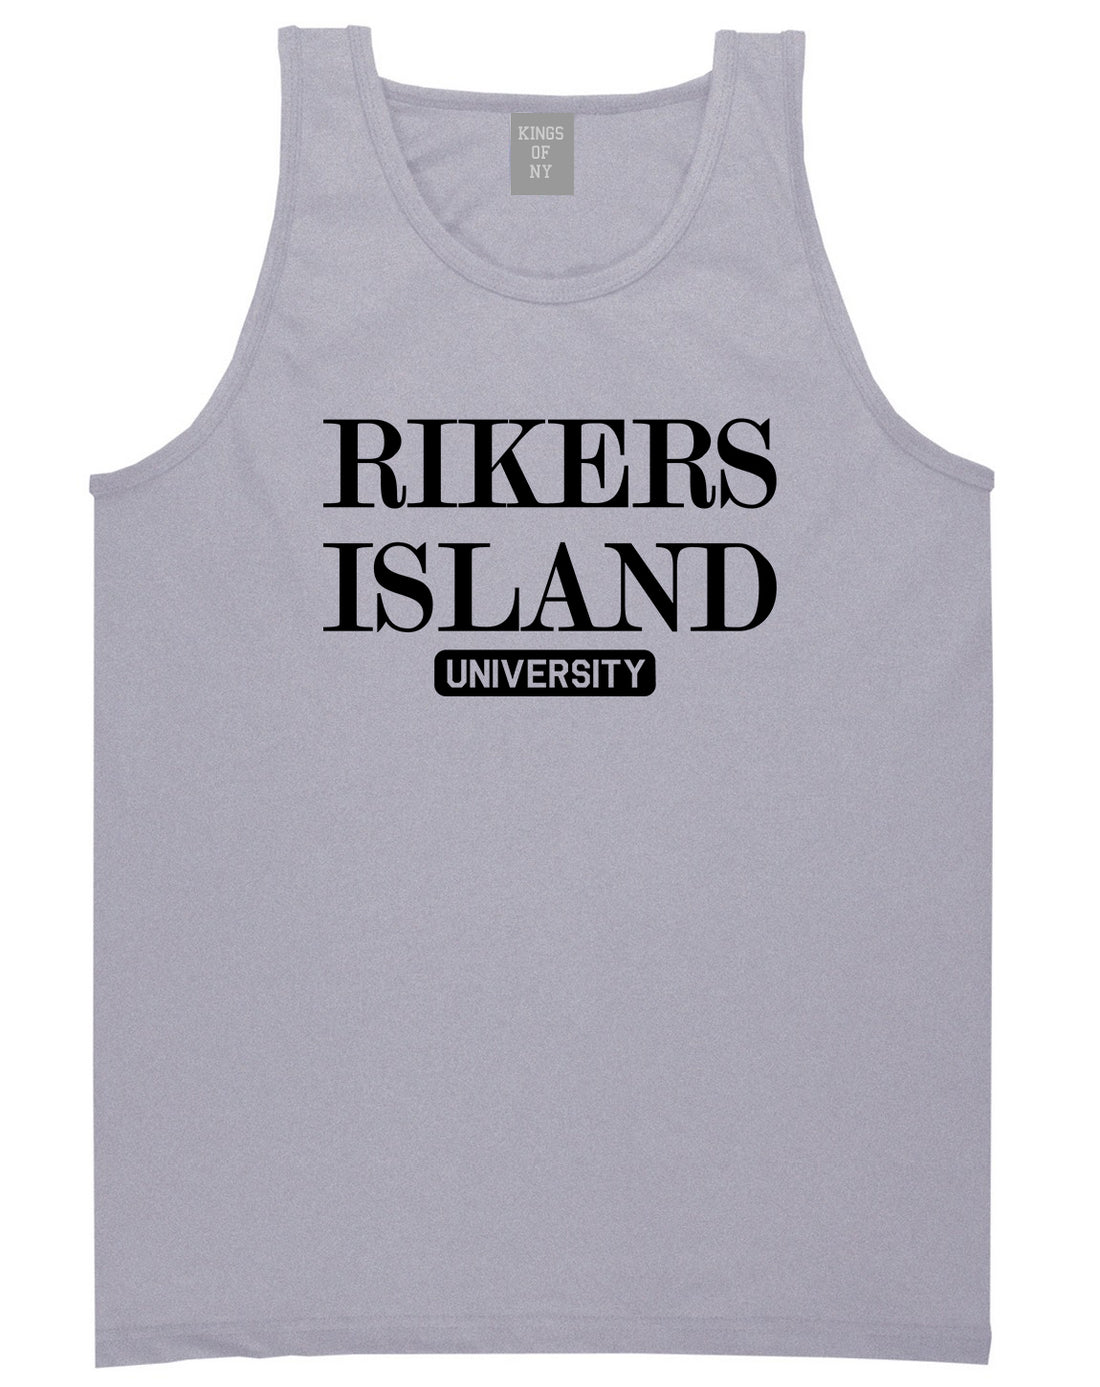 Rikers Island University Mens Tank Top T-Shirt Grey